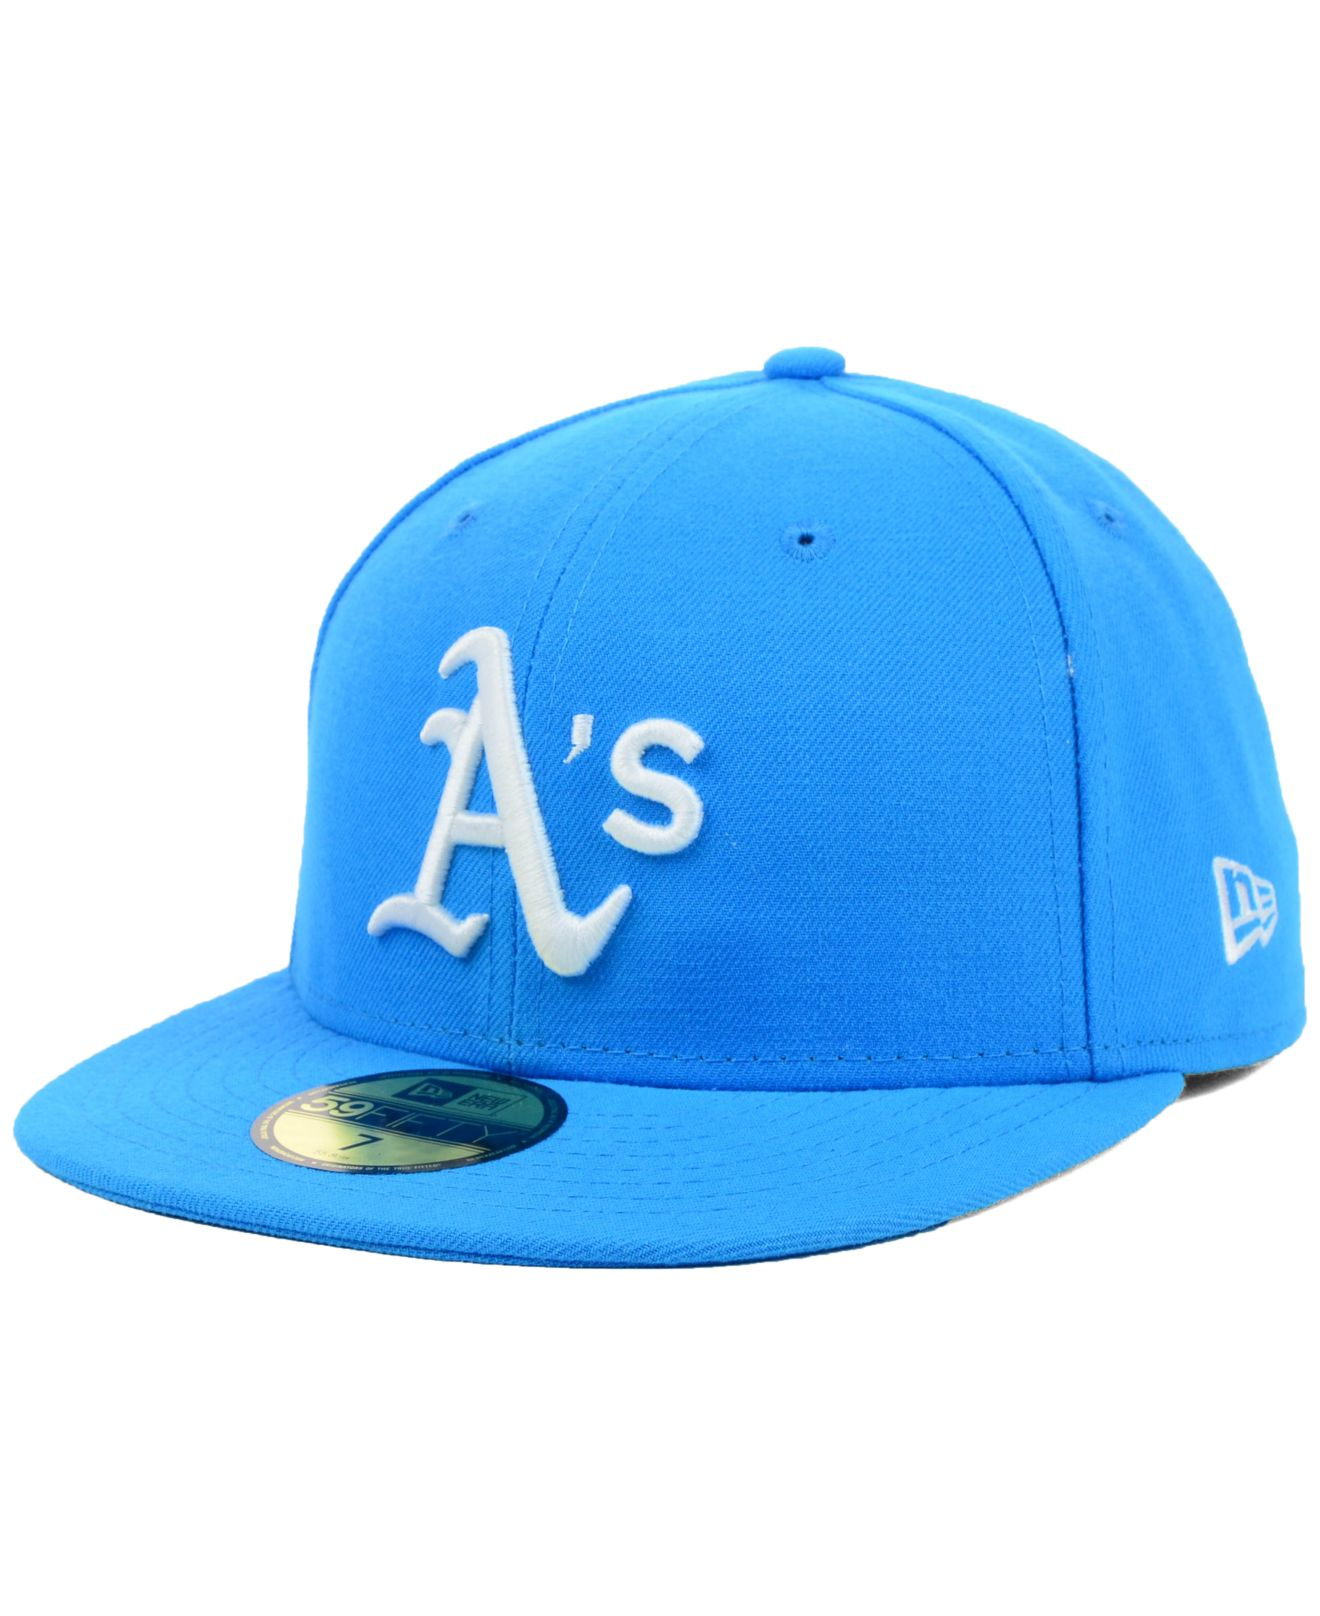 Womens MLB Oakland Athletics Hats - Accessories